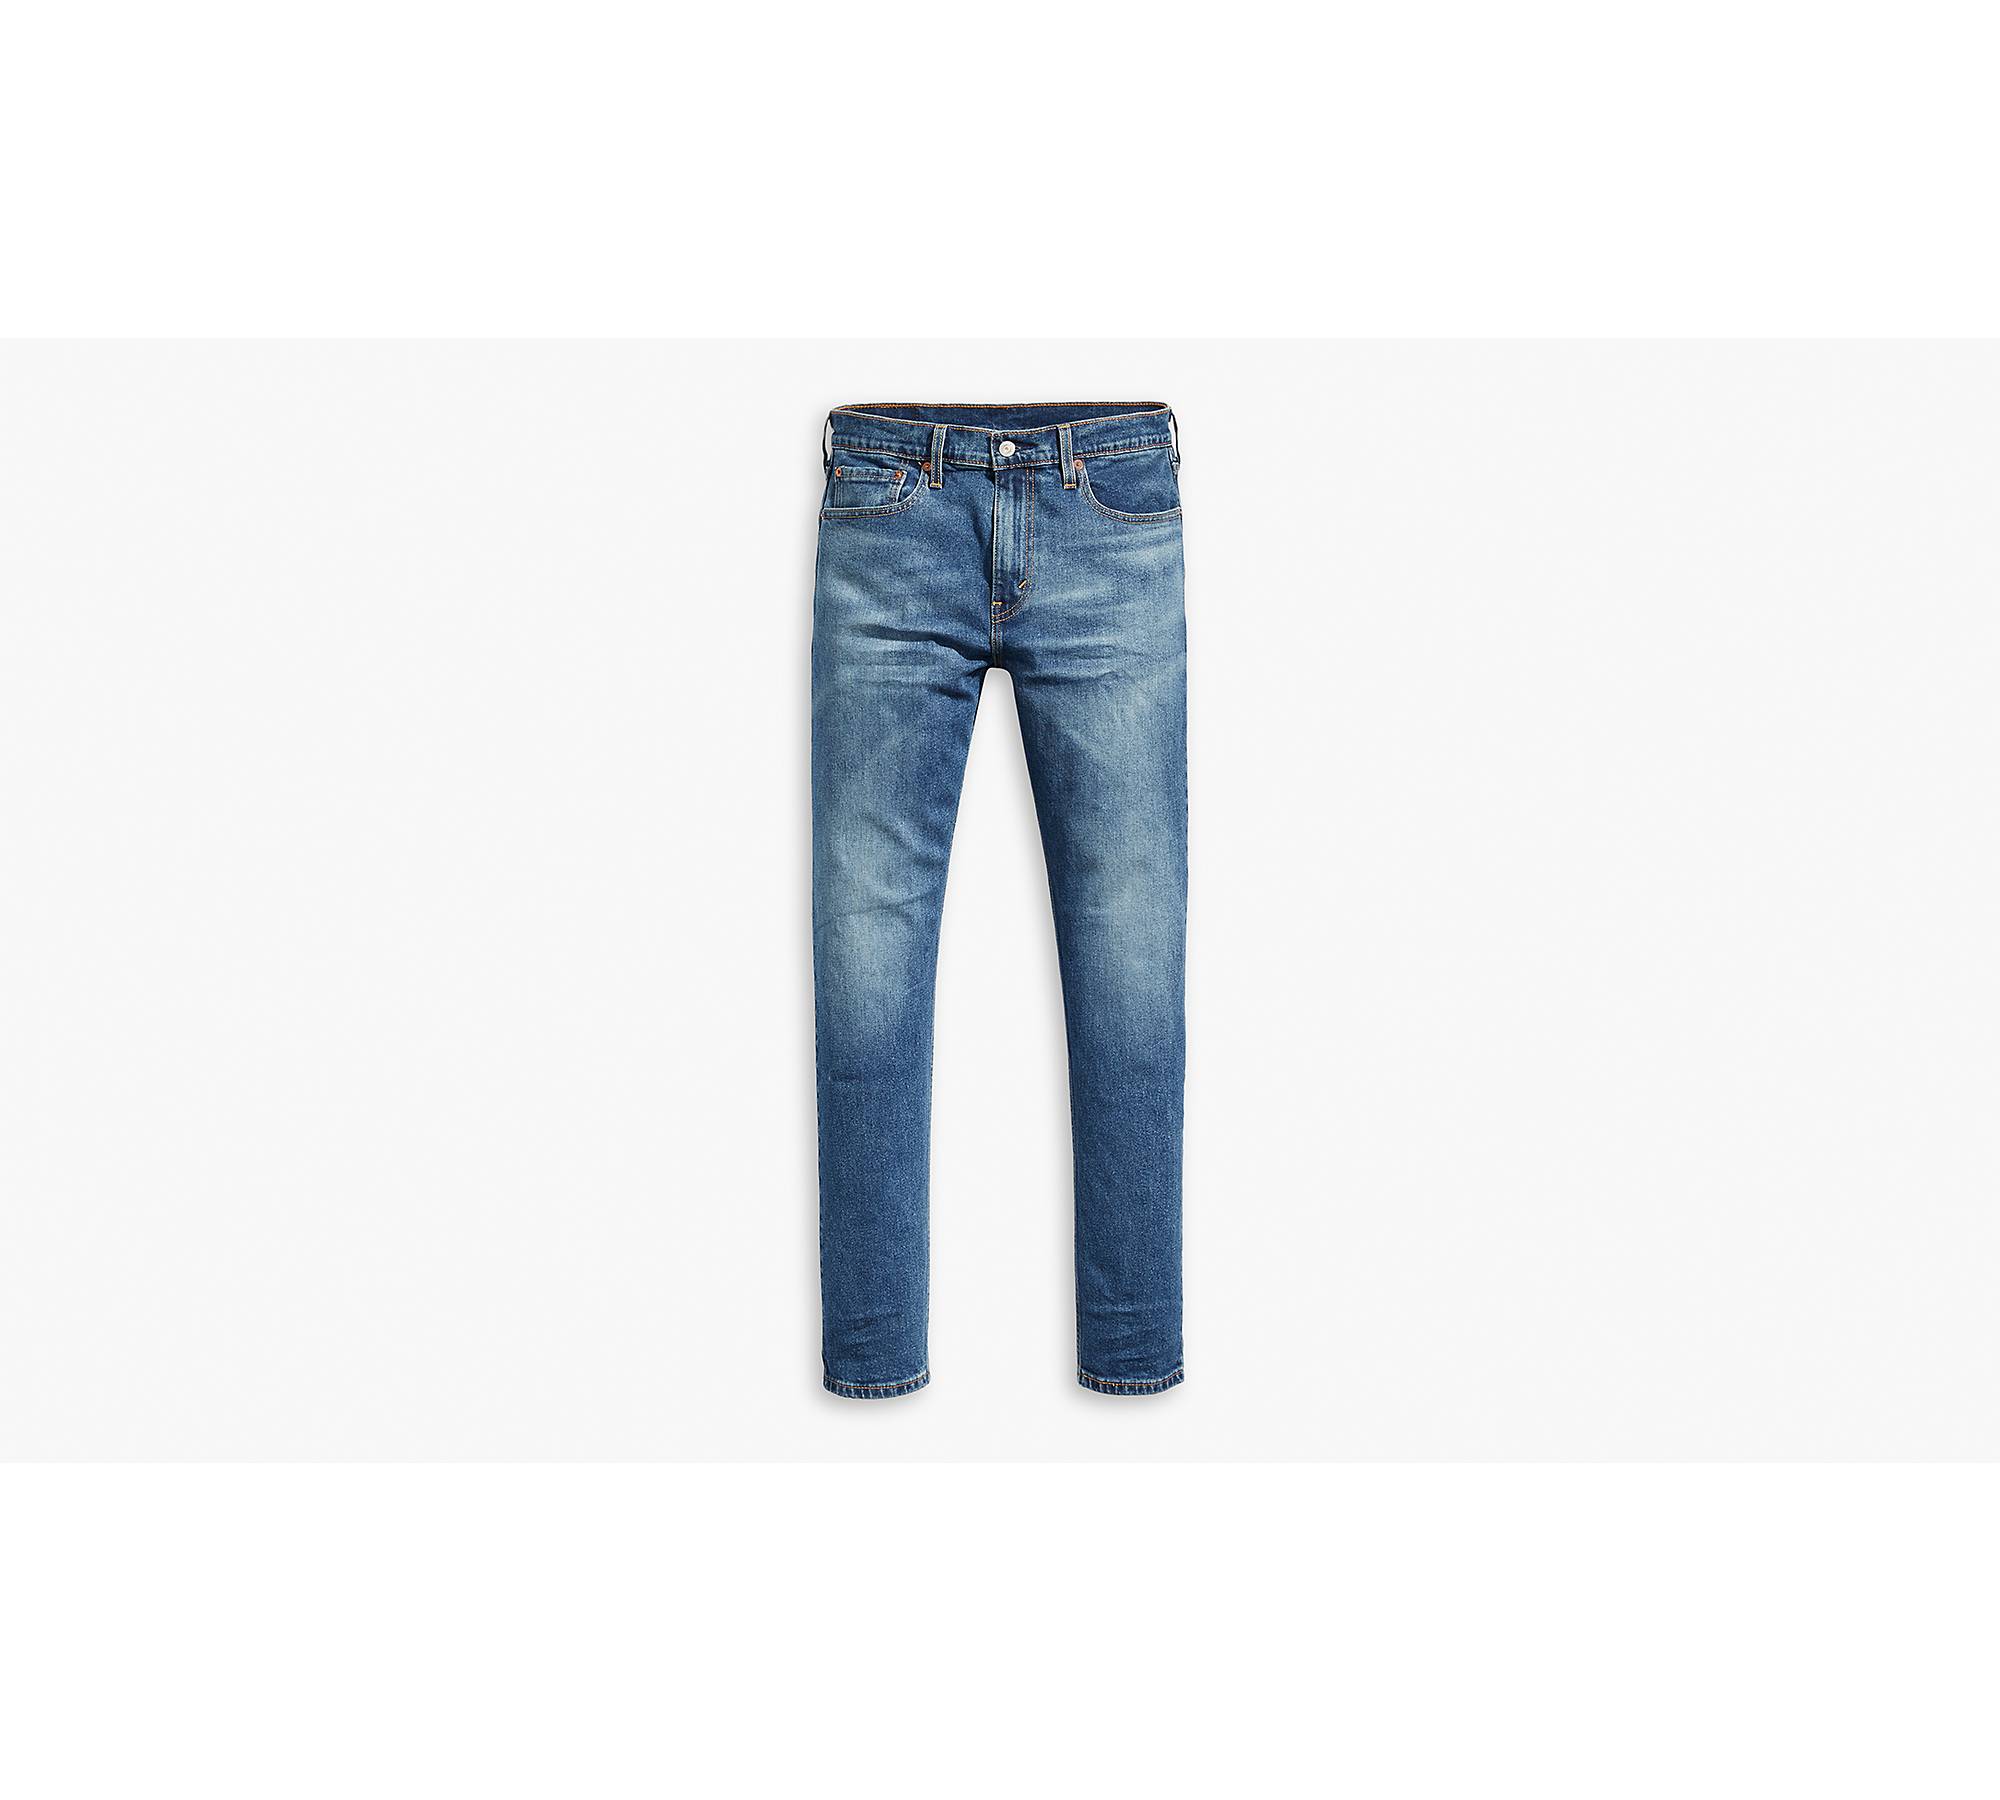 Levi's 512 Slim Taper Jeans Pelican Rust at